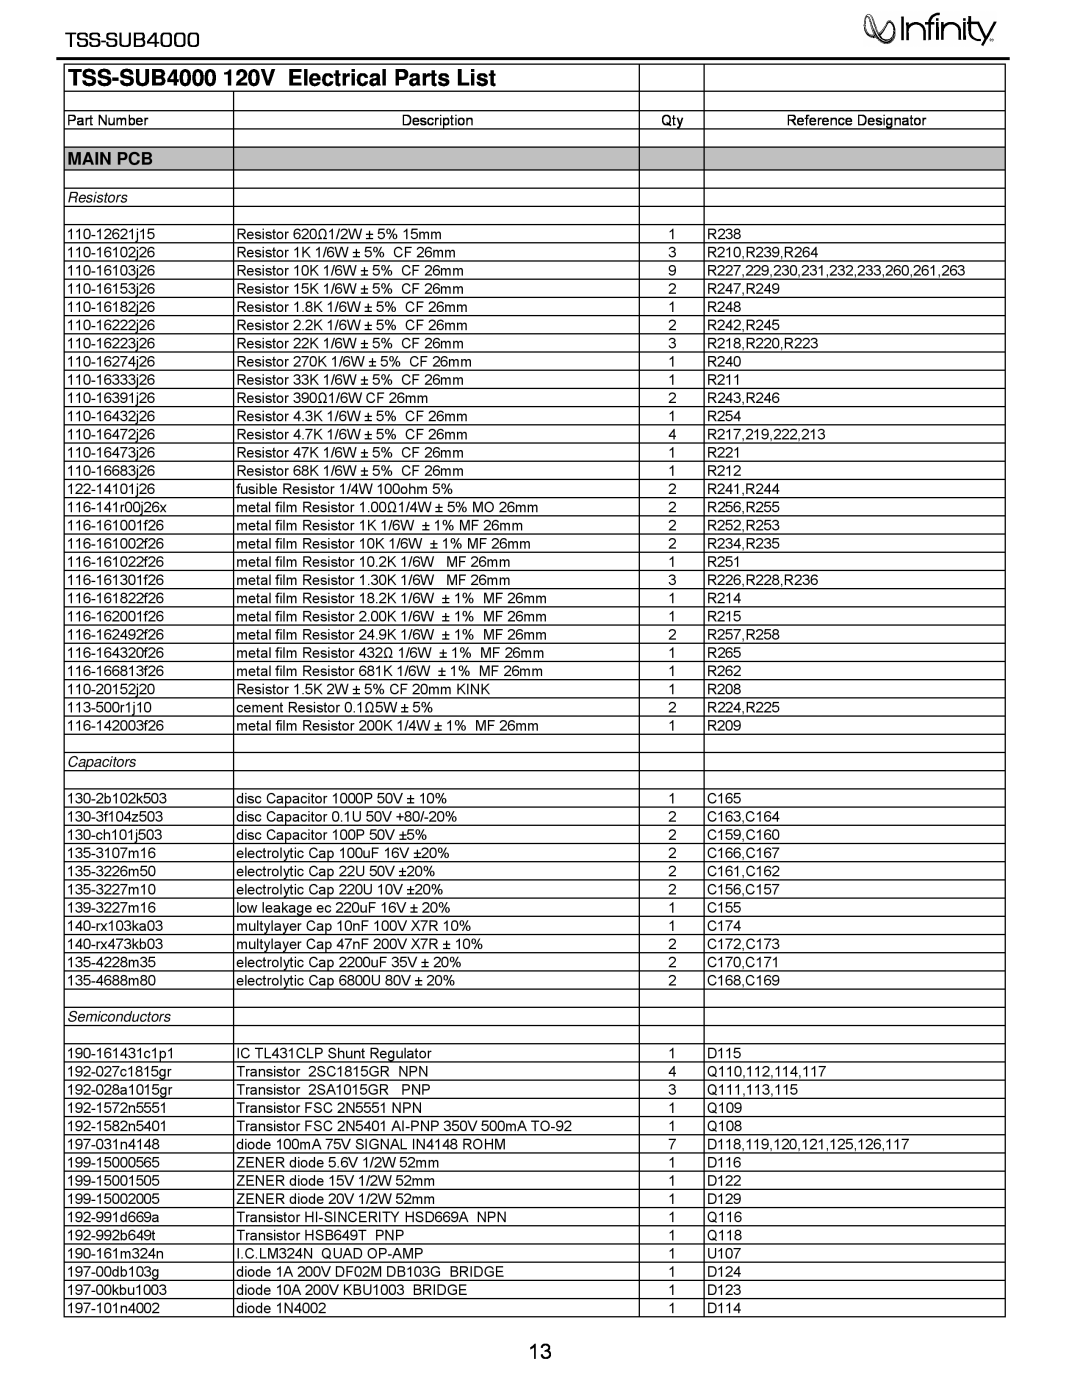 Infinity service manual TSS-SUB4000120V Electrical Parts List, Main Pcb, Resistors, Capacitors, Semiconductors 